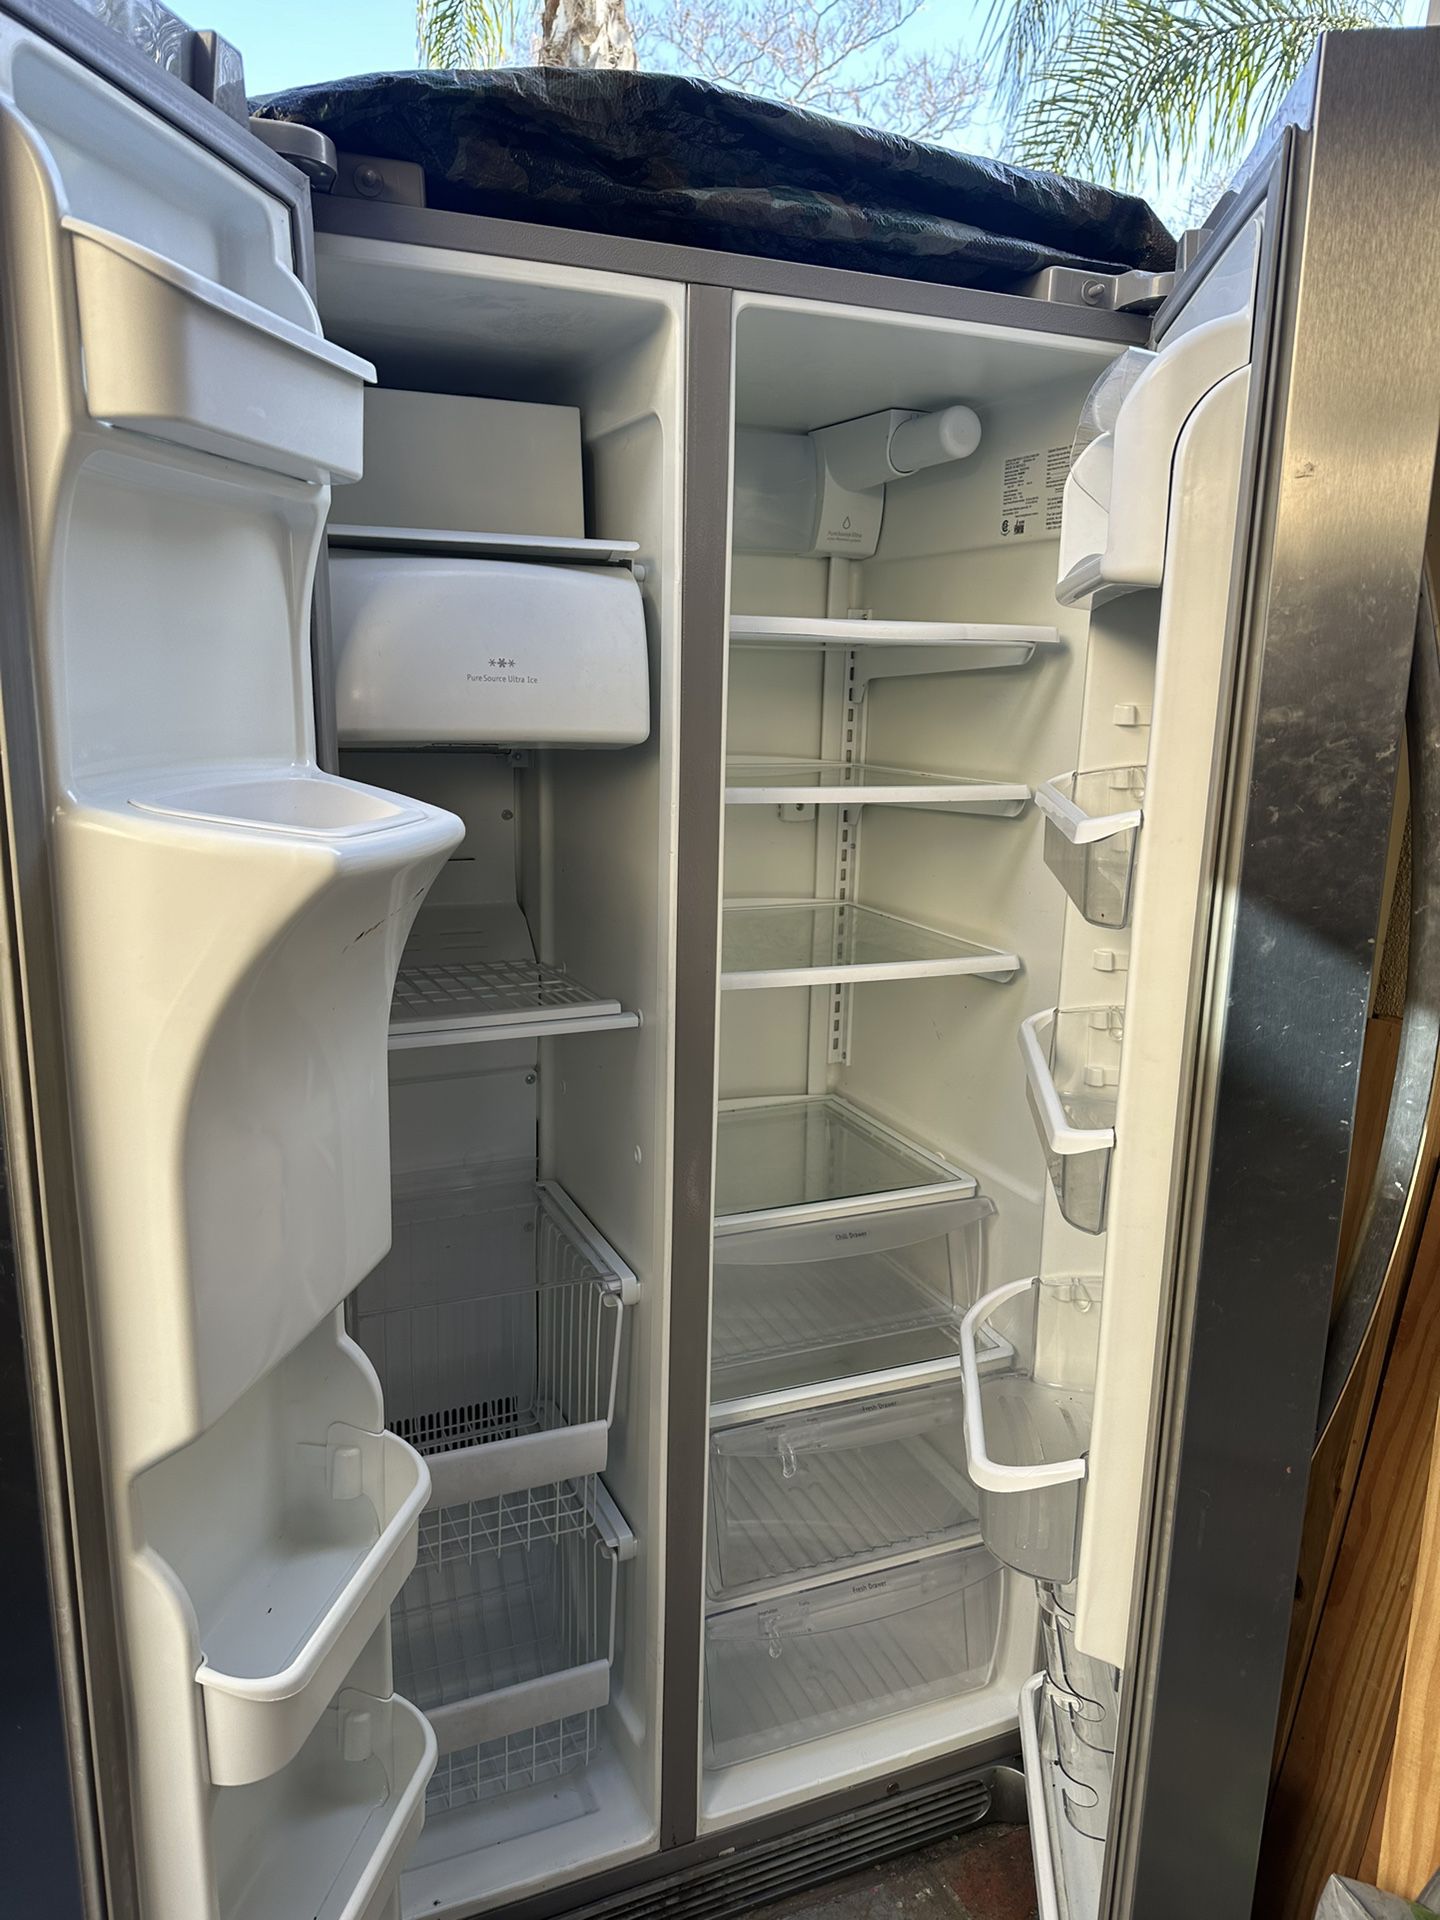 Frigidaire Gallery Refrigerator Stainless Steel 